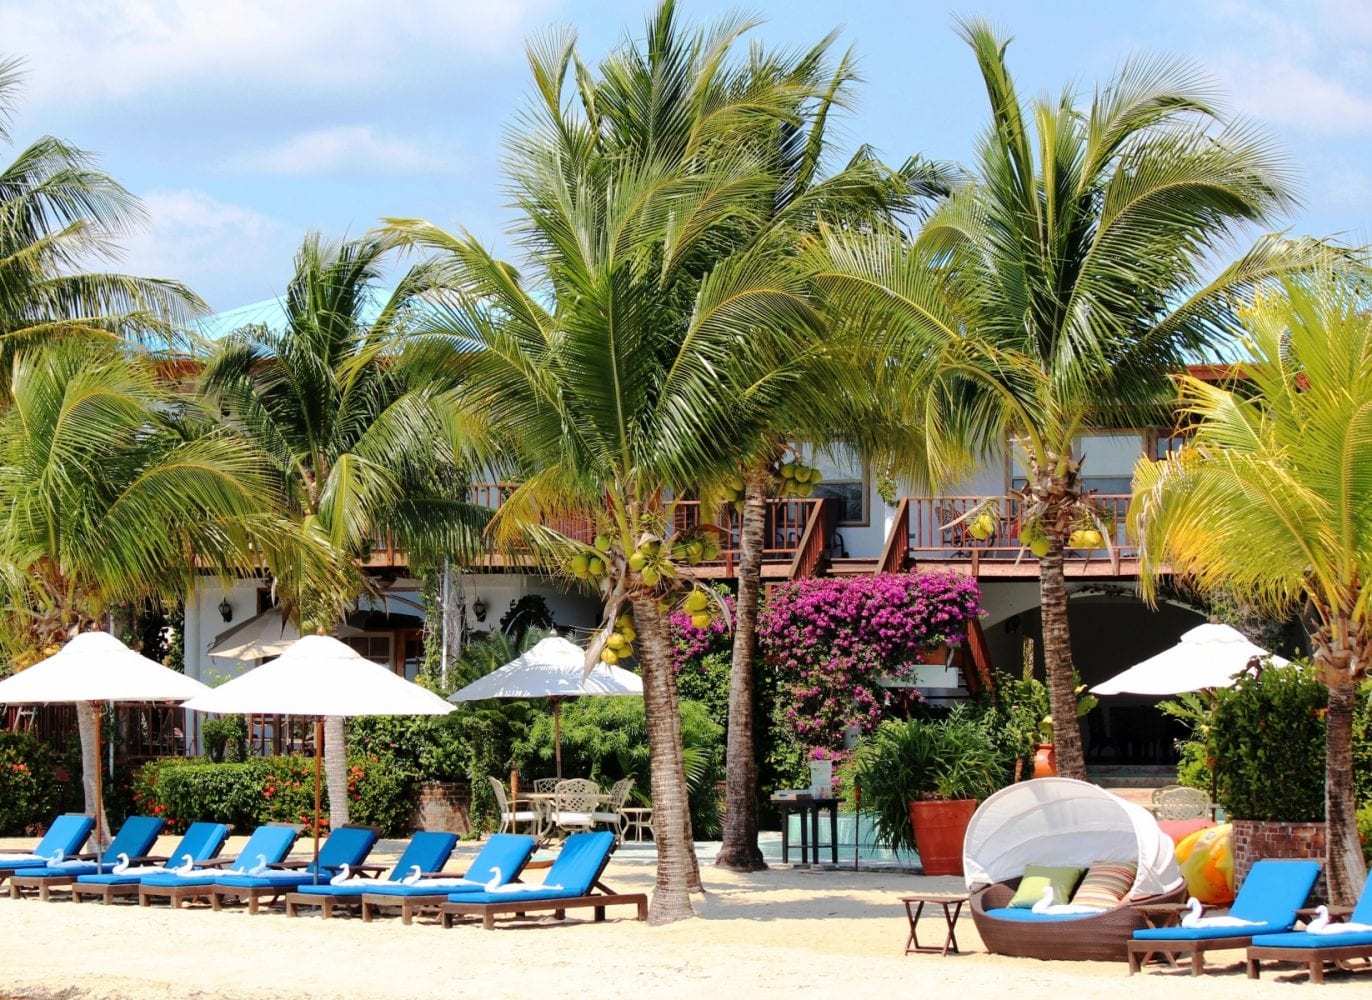 Toward-Dolphin-Pool-Chabil-Mar-Resort-Belize